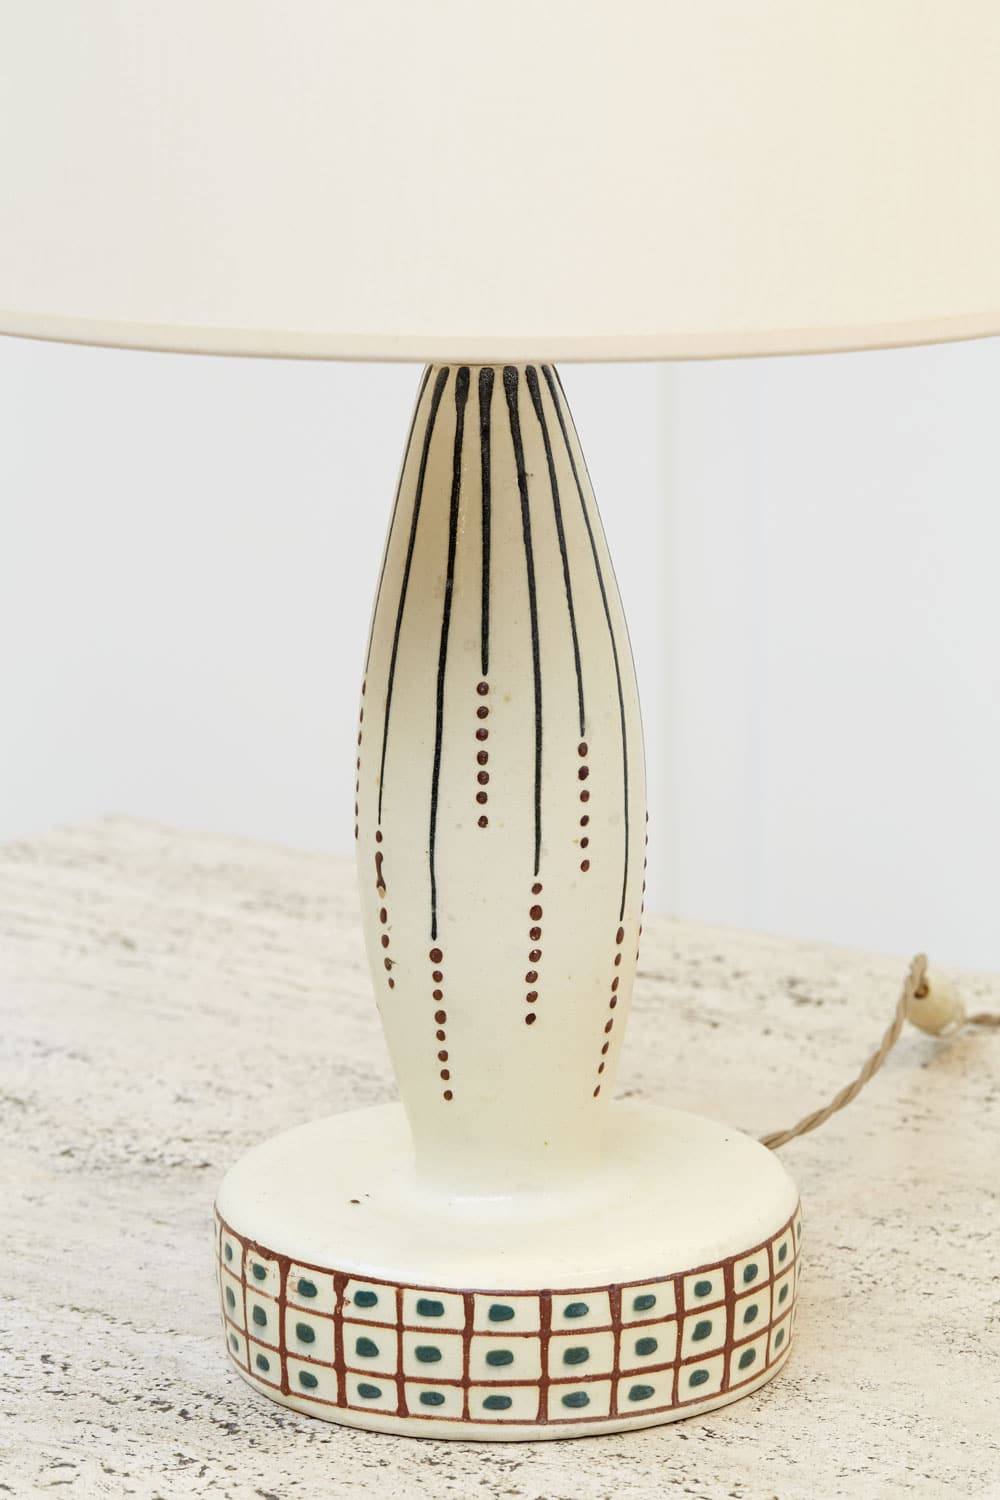 Francis Jourdain, Ceramic lamp, vue 03